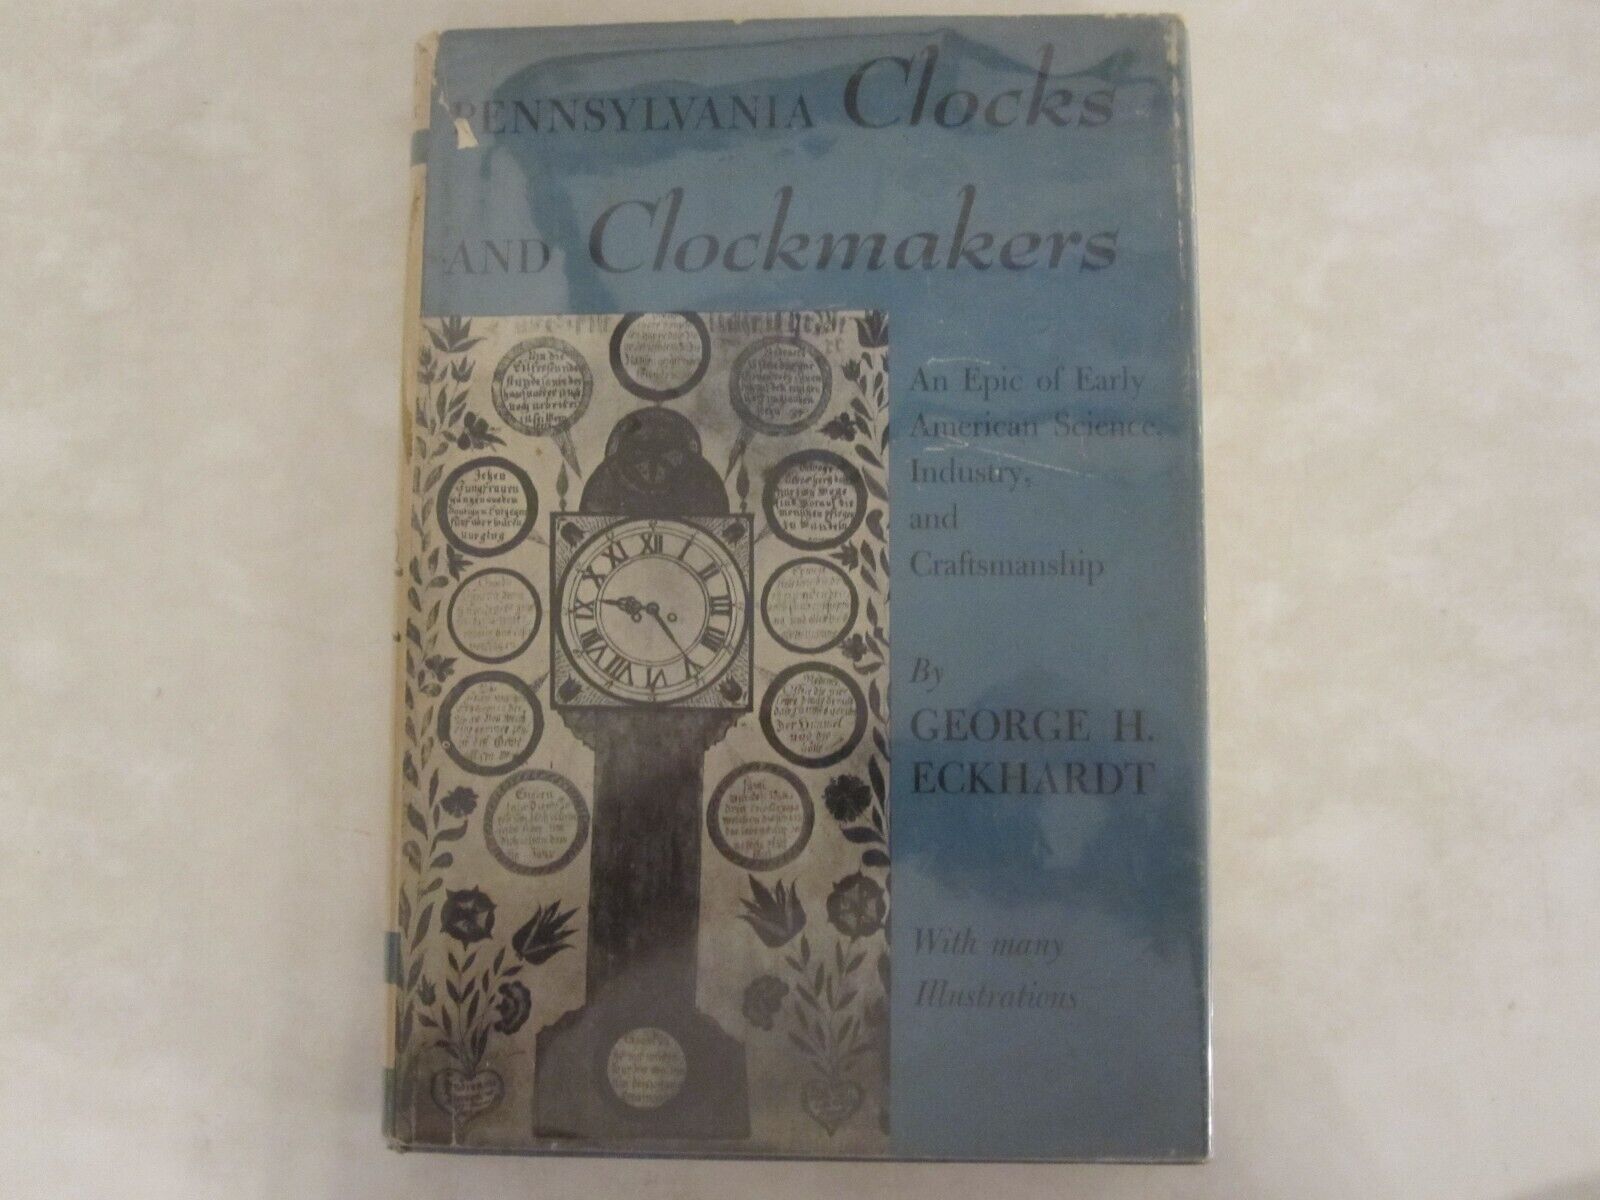 Pennsylvania Clocks & Clockmakers, George Eckhardt 1955 3rd printing, hardcover